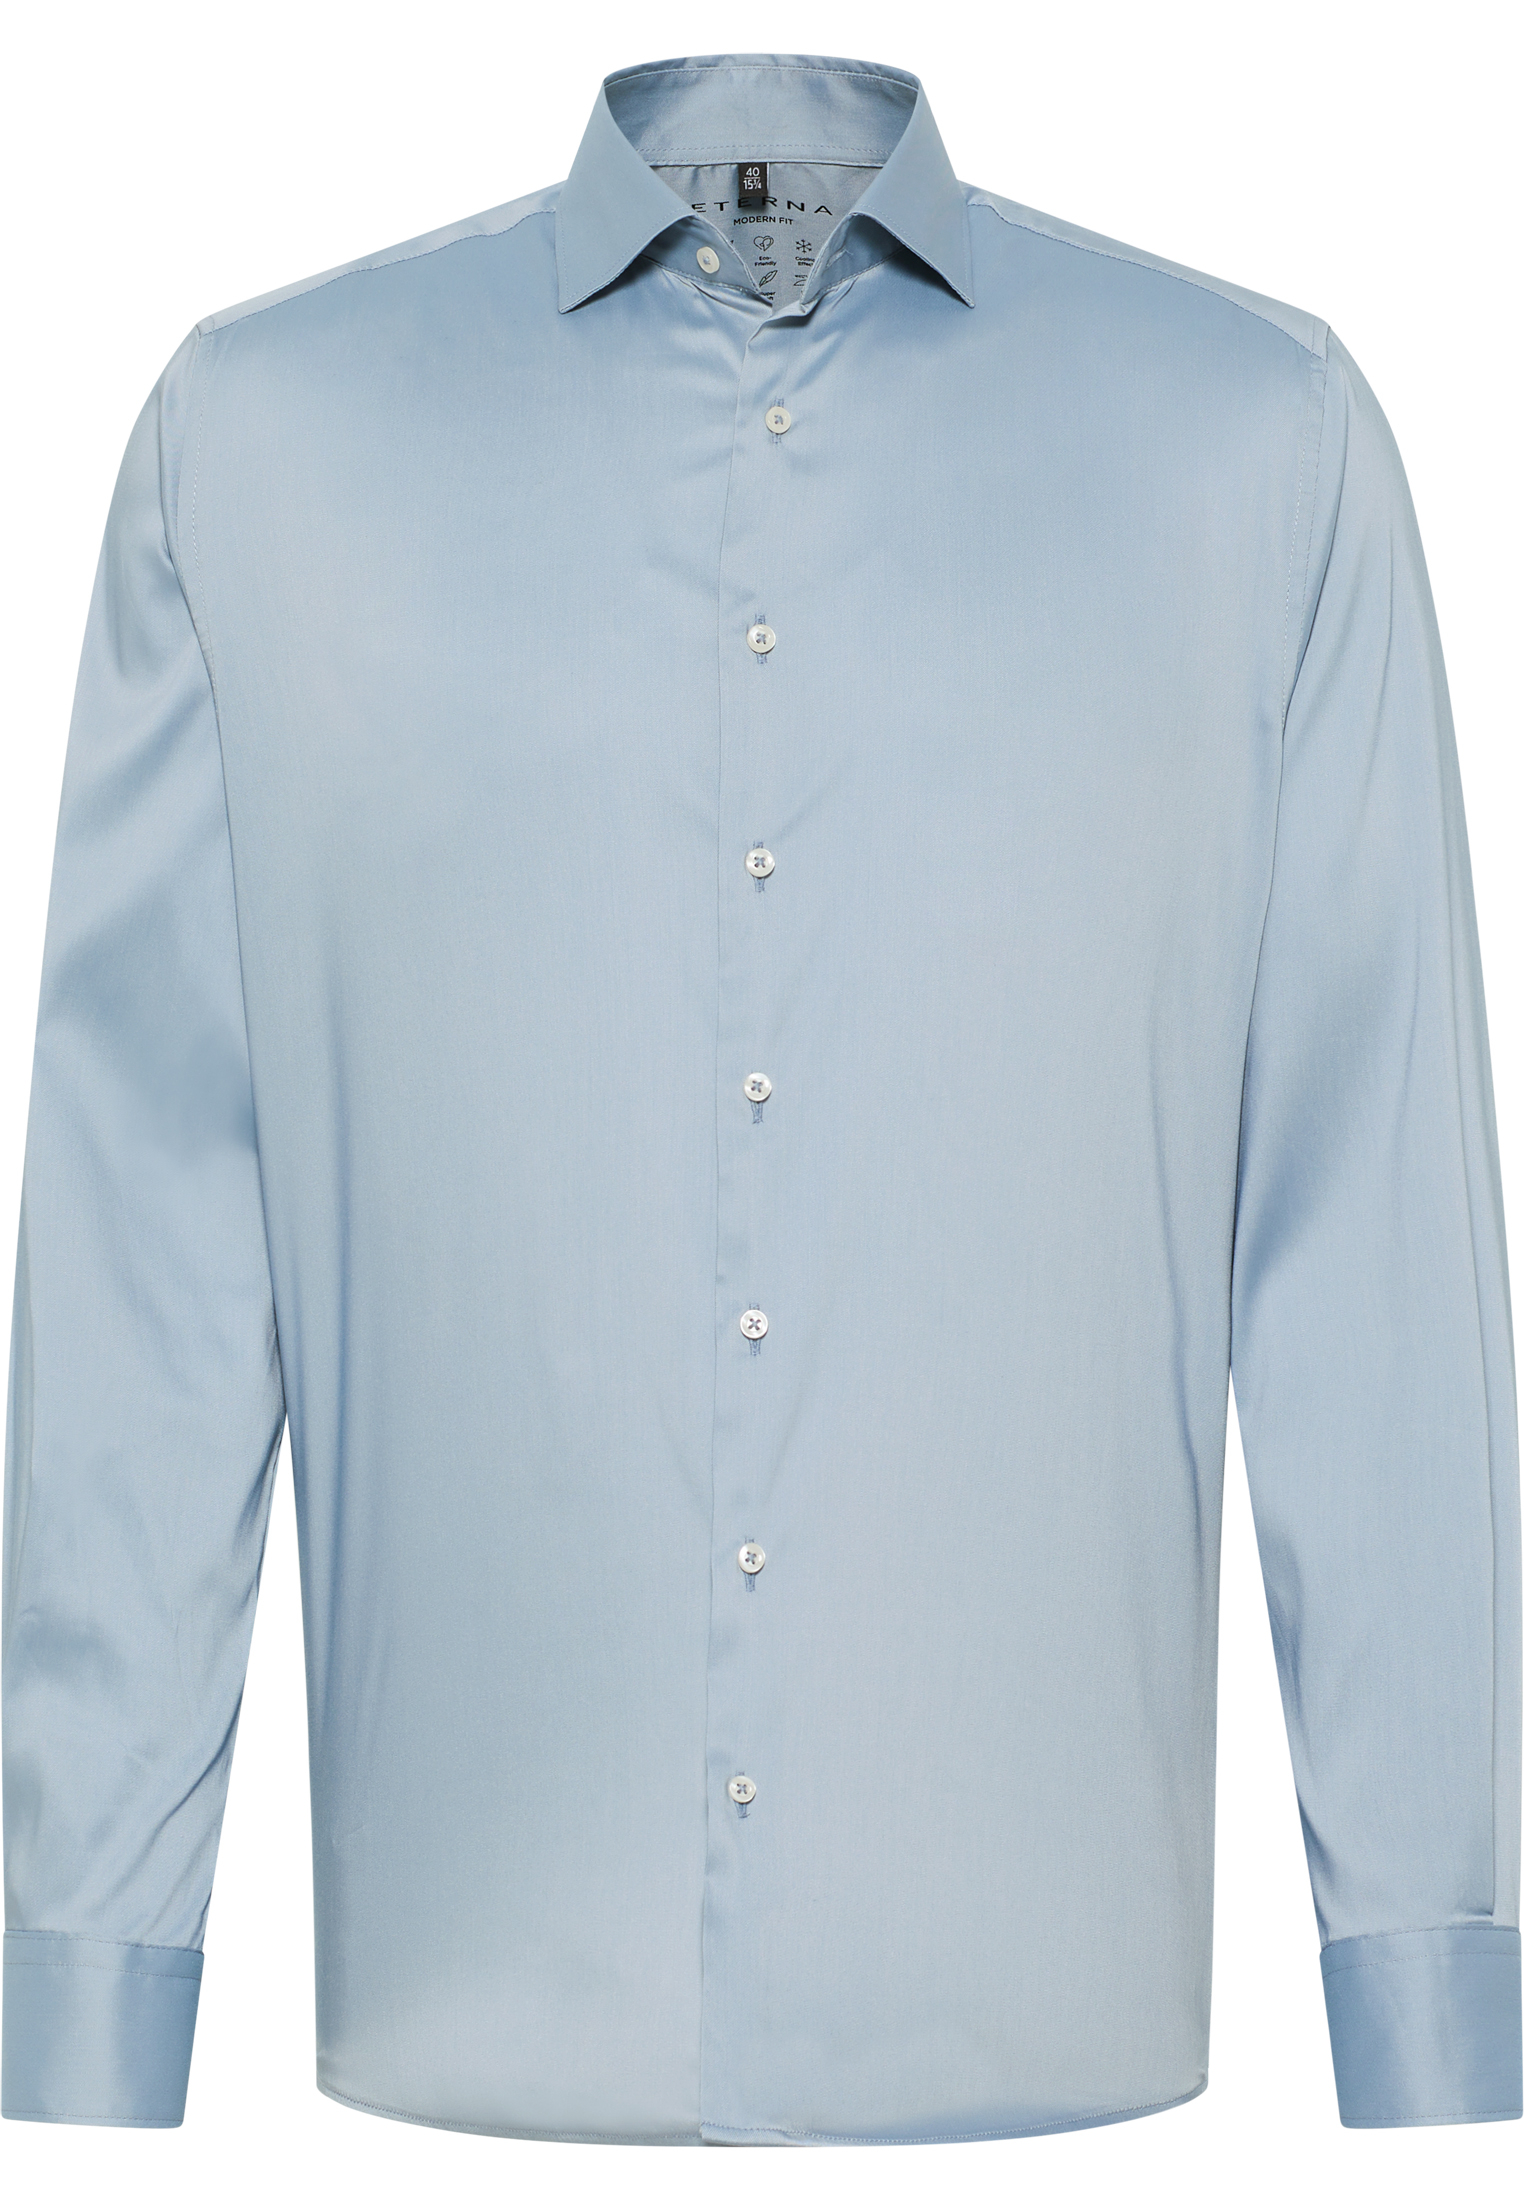 MODERN FIT Performance Shirt in graublau unifarben